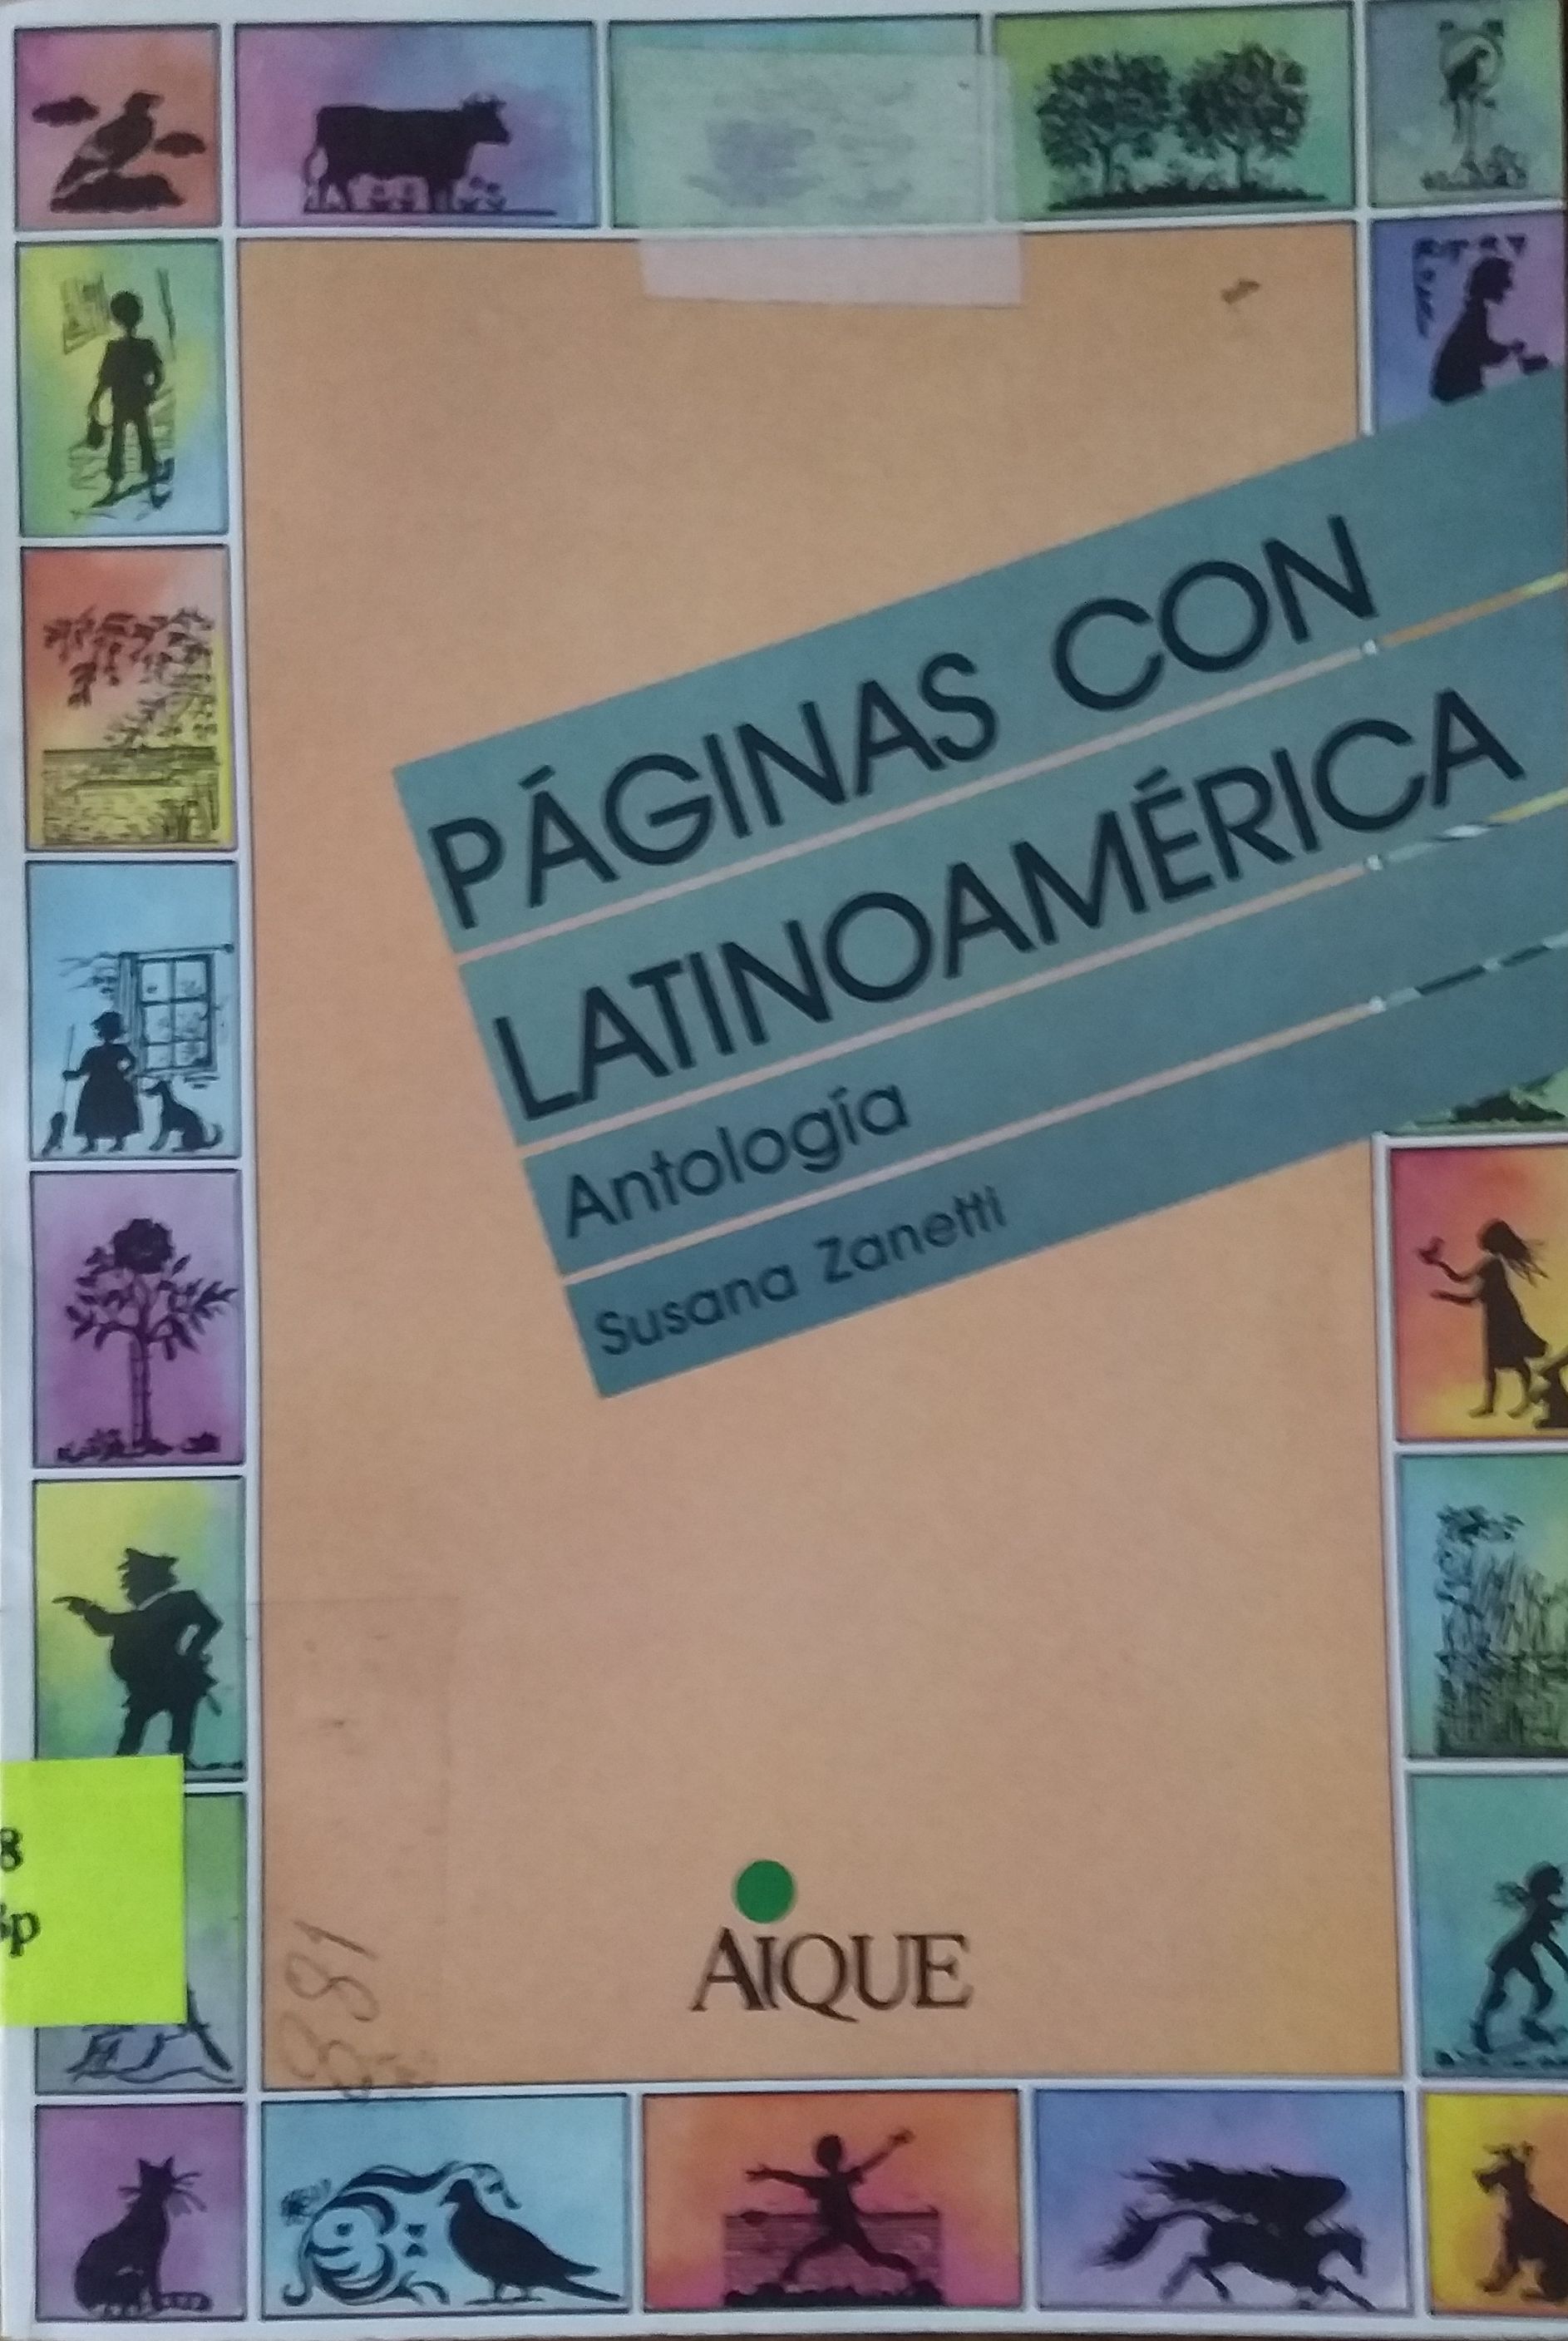 Páginas con Latinoamérica